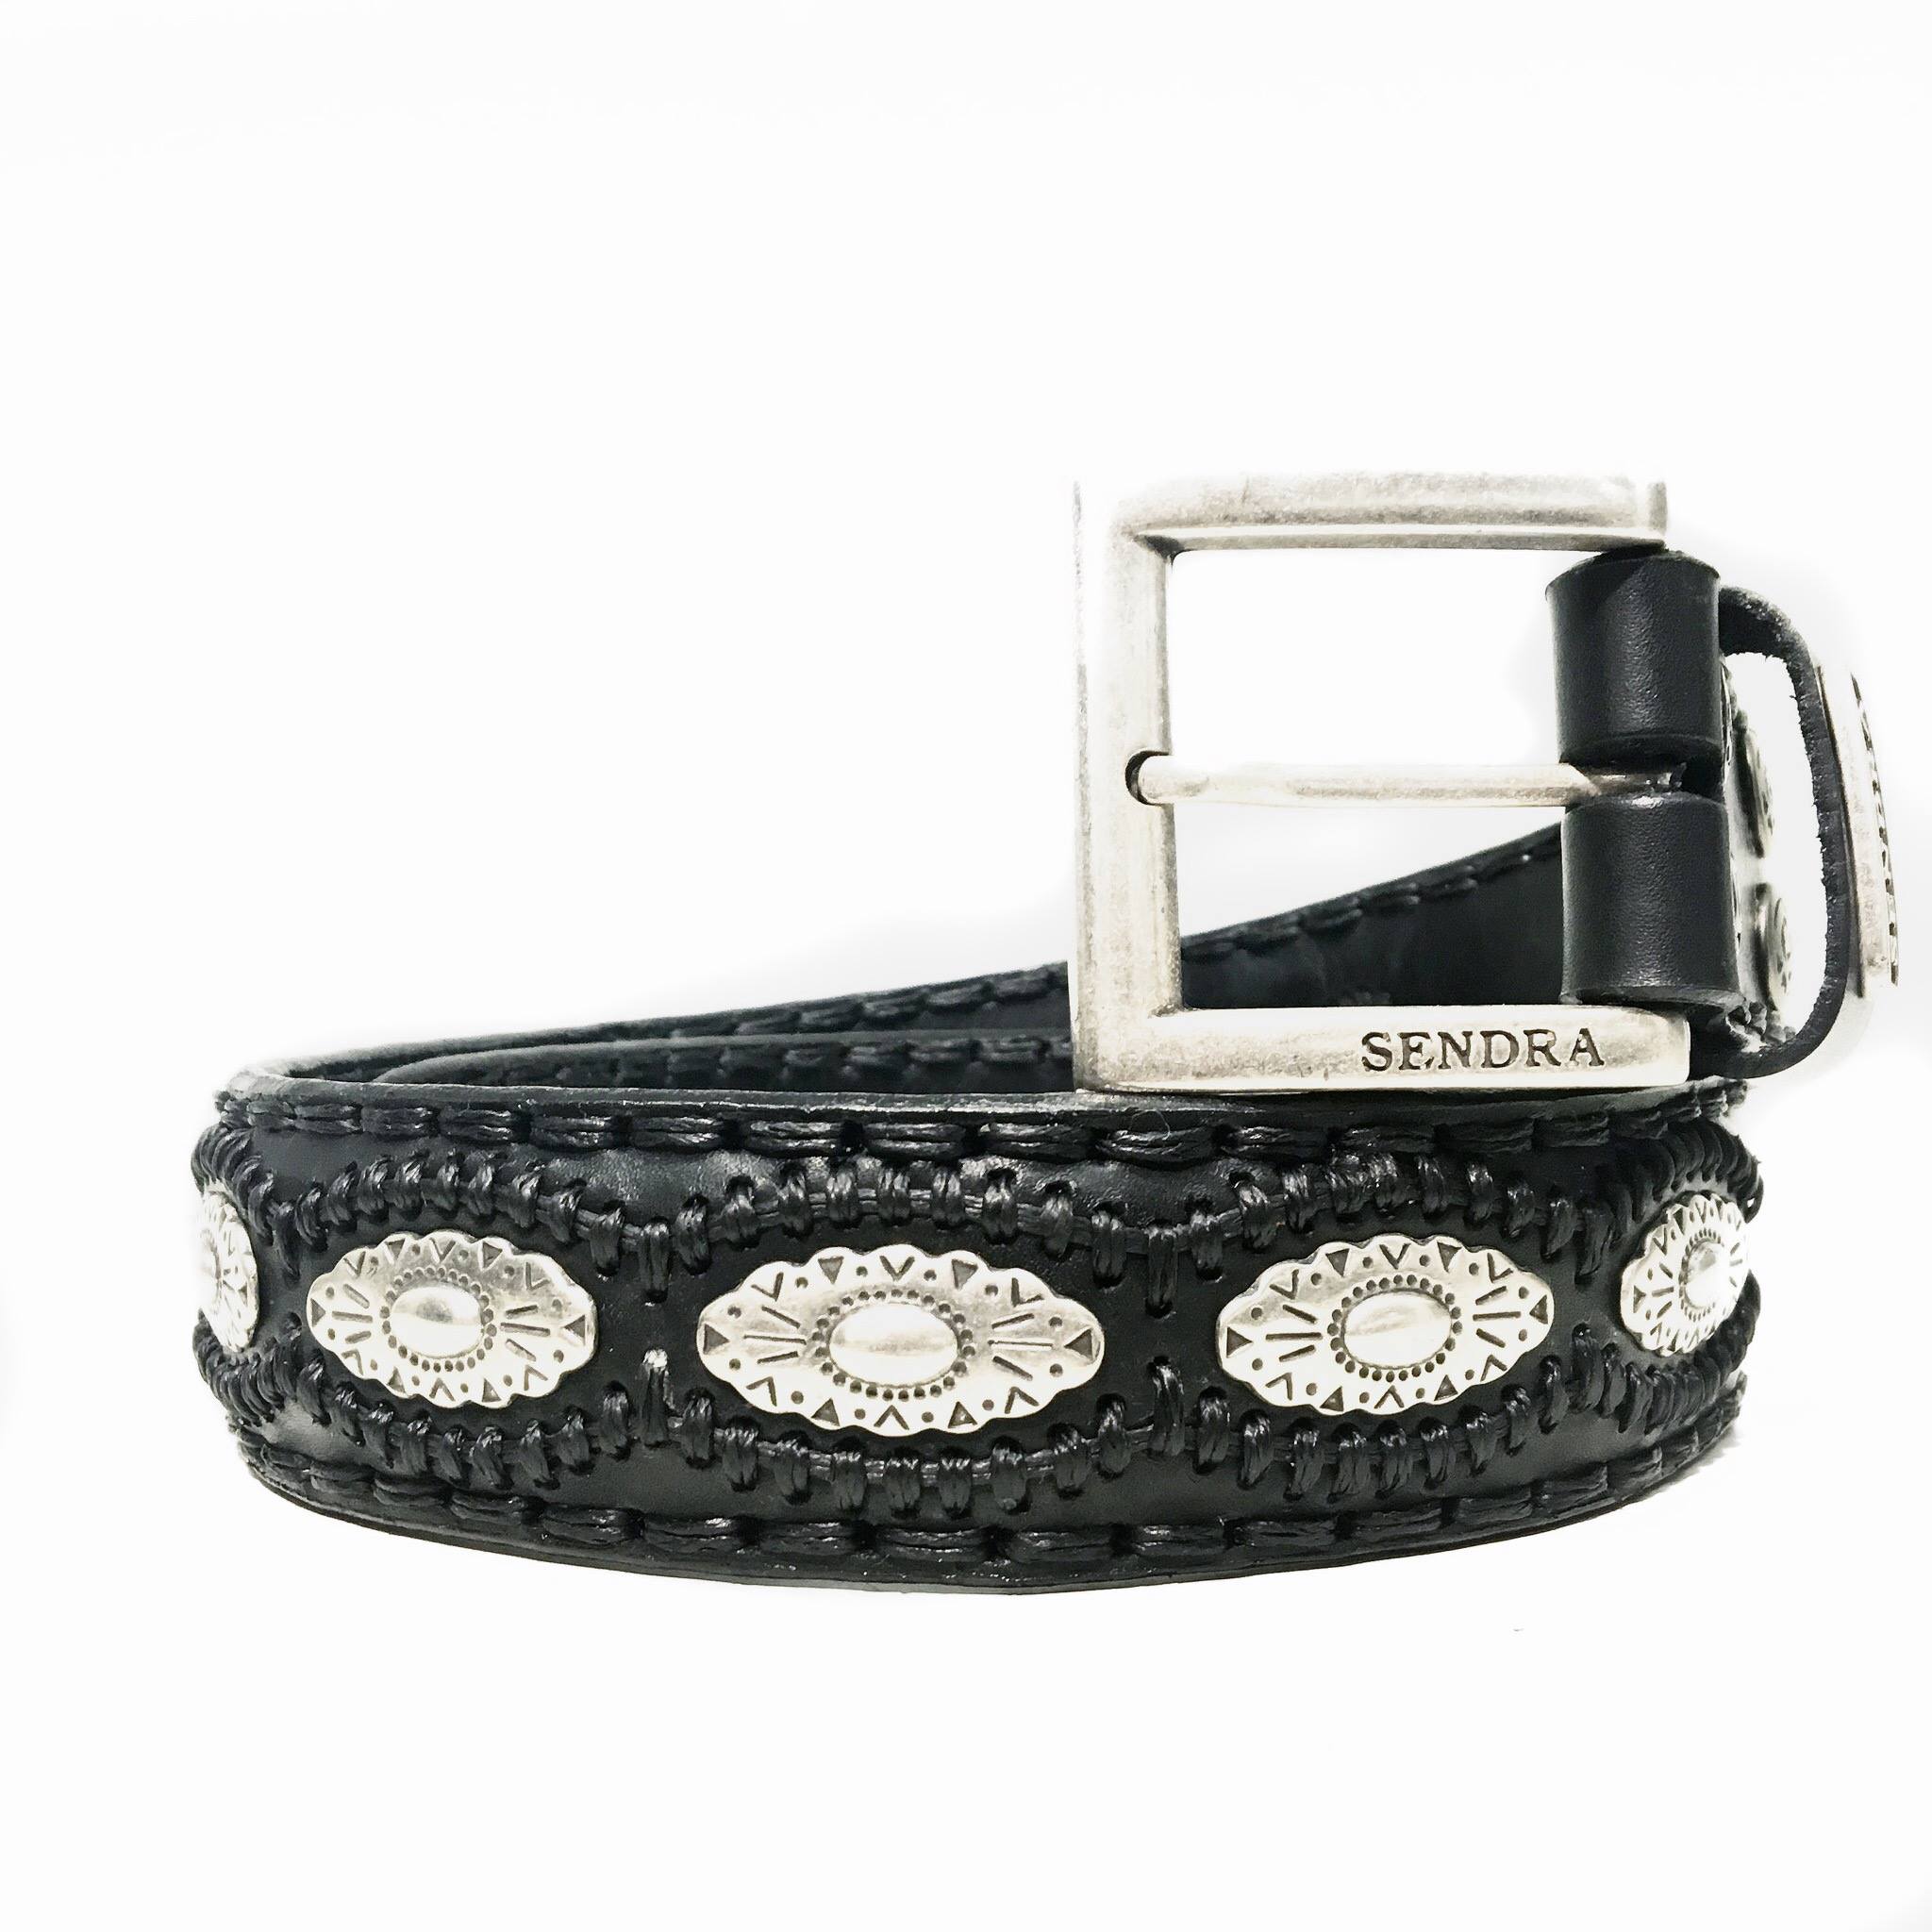 Sendra belt - 7606 black/black silver